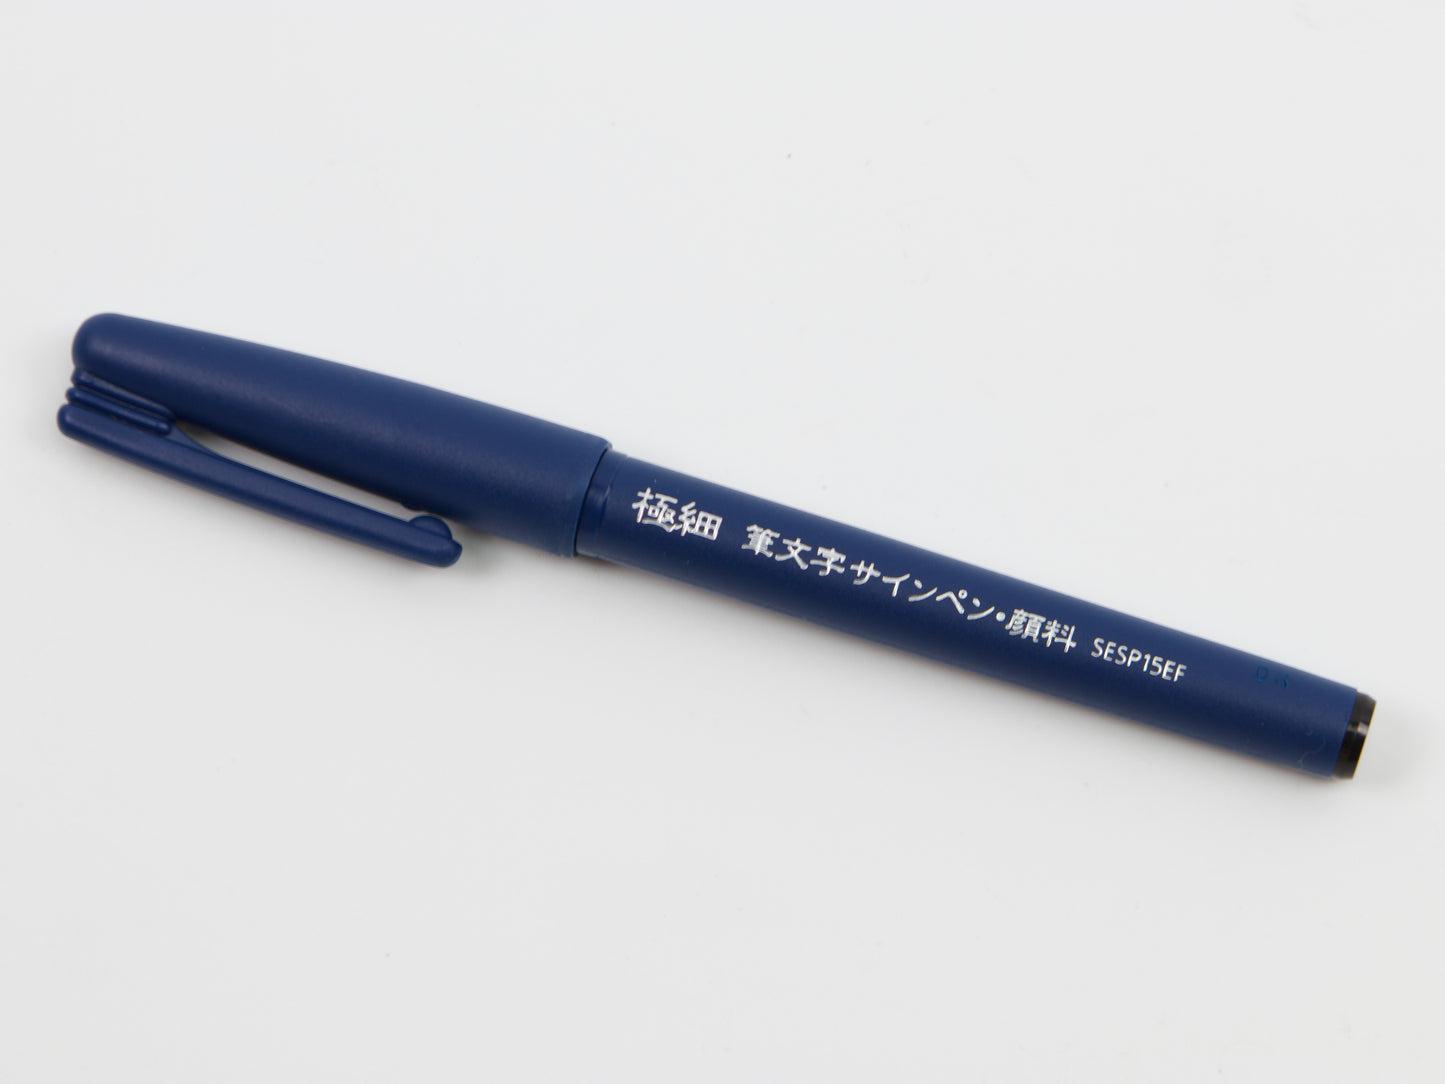 Pentel Fudemoji Sign Pen